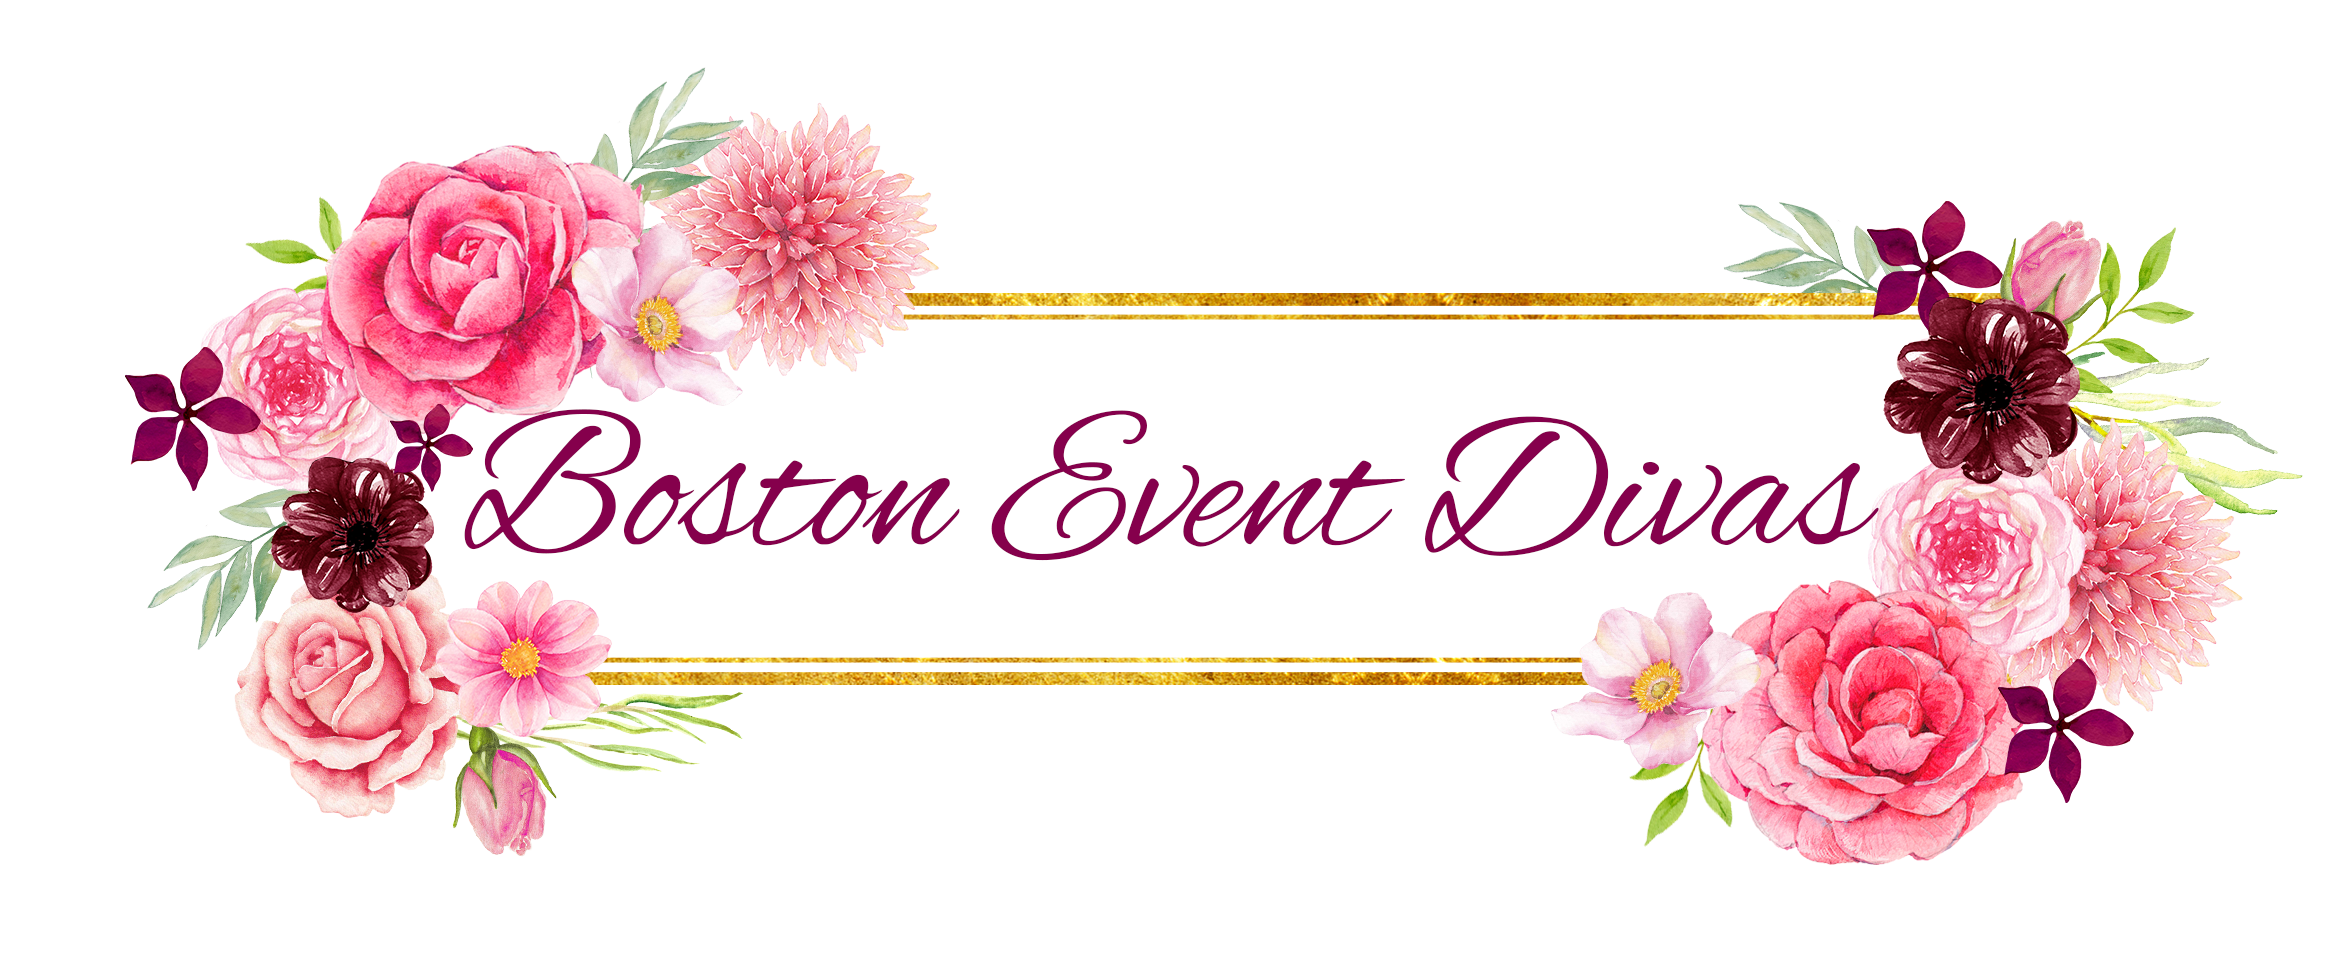 Boston Event Divas